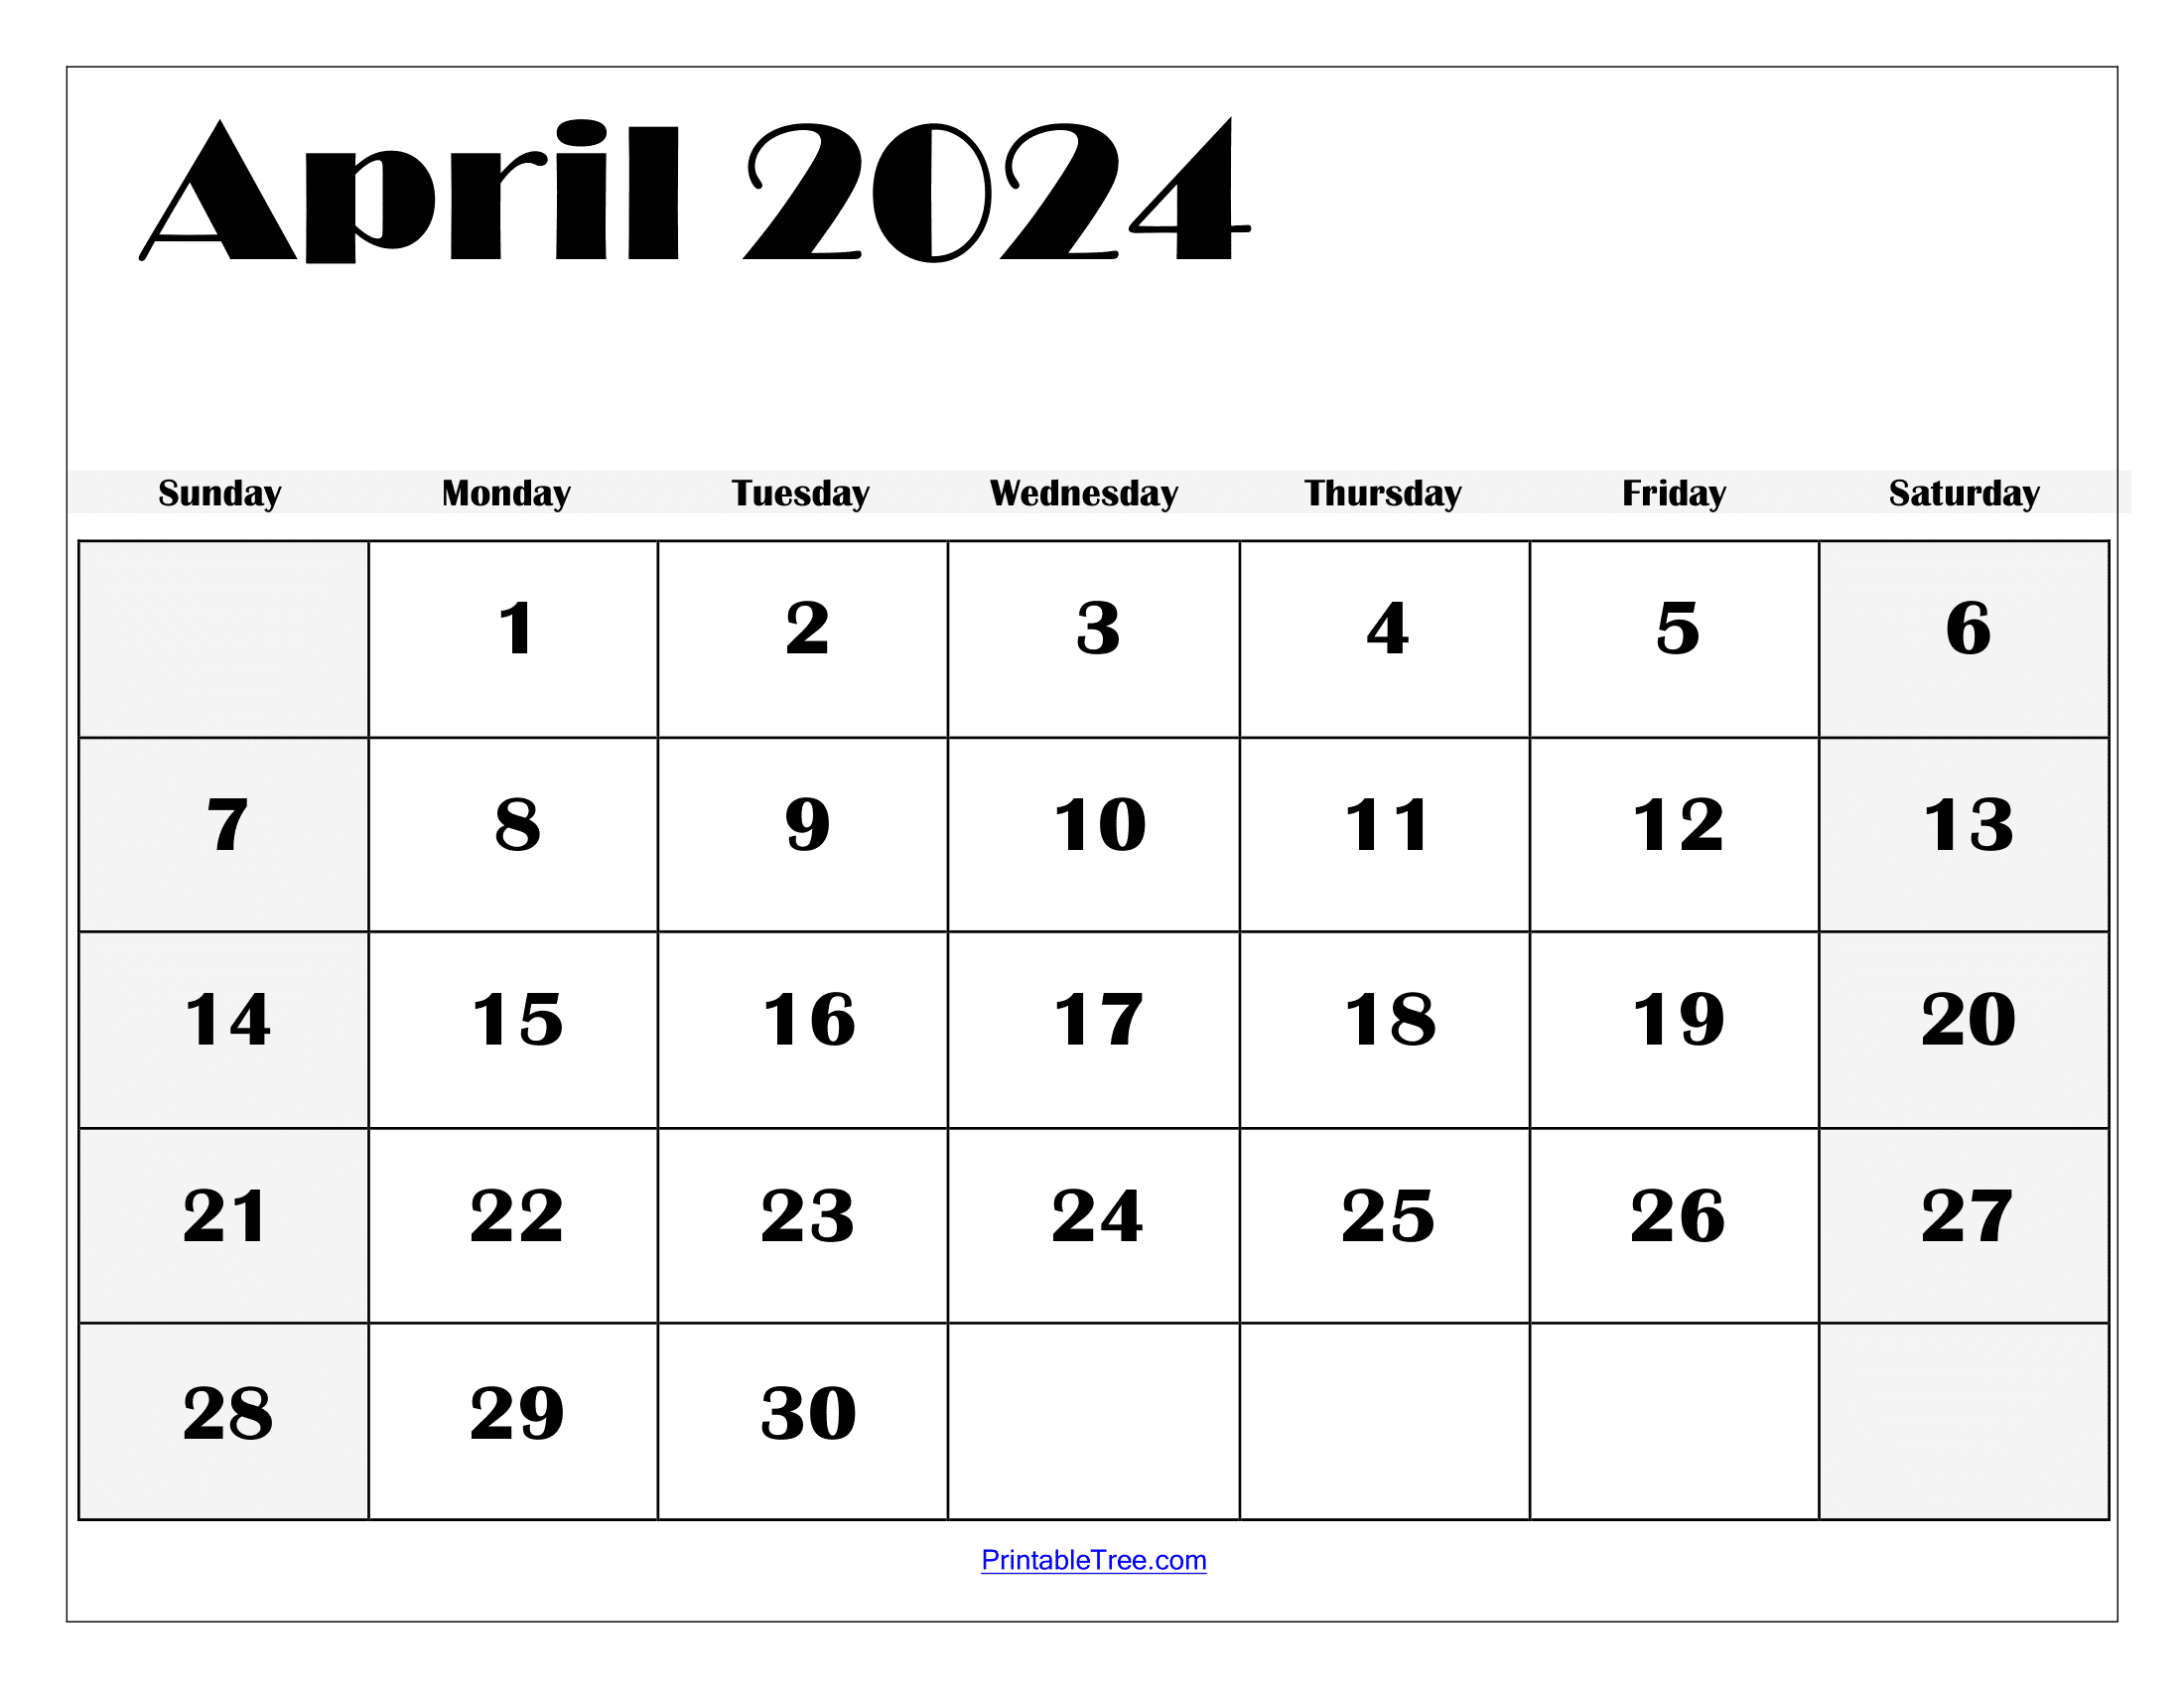 Blank April 2024 Calendar Printable Pdf Template With Holidays for A-Printable-Calendar April 2024